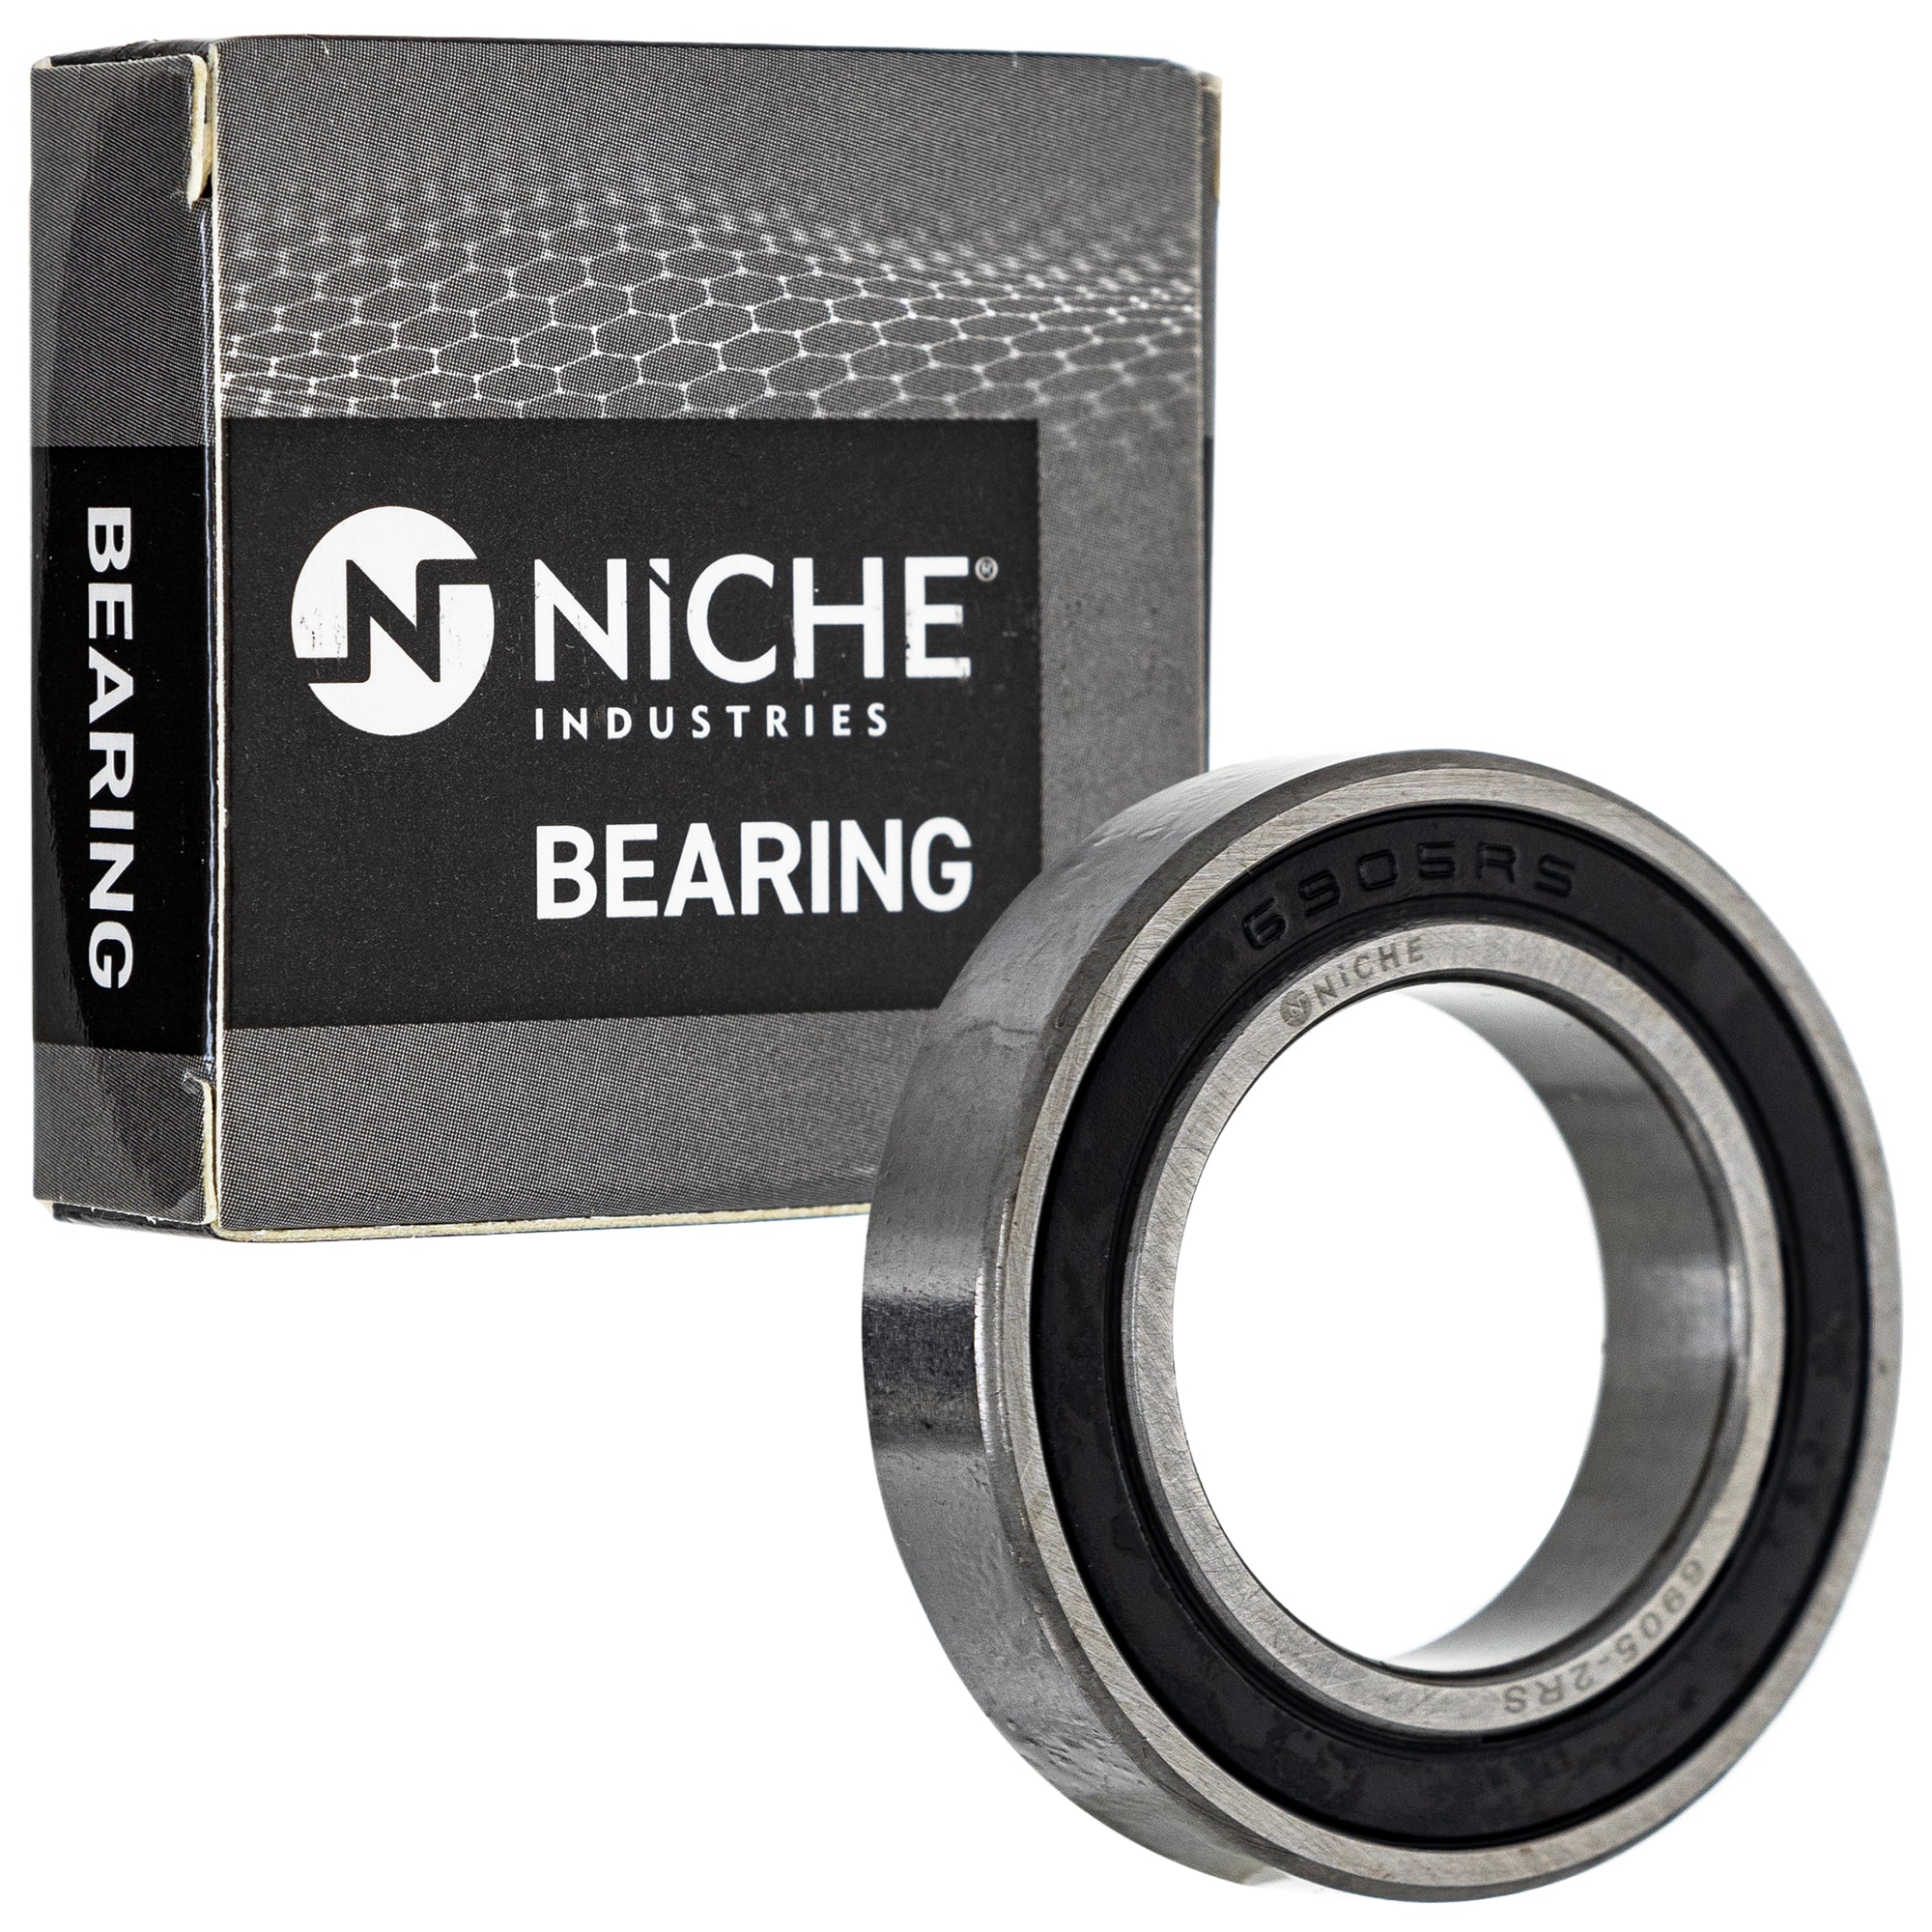 NICHE 519-CBB2251R Bearing for zOTHER VTX1800T3 VTX1800T2 VTX1800T1